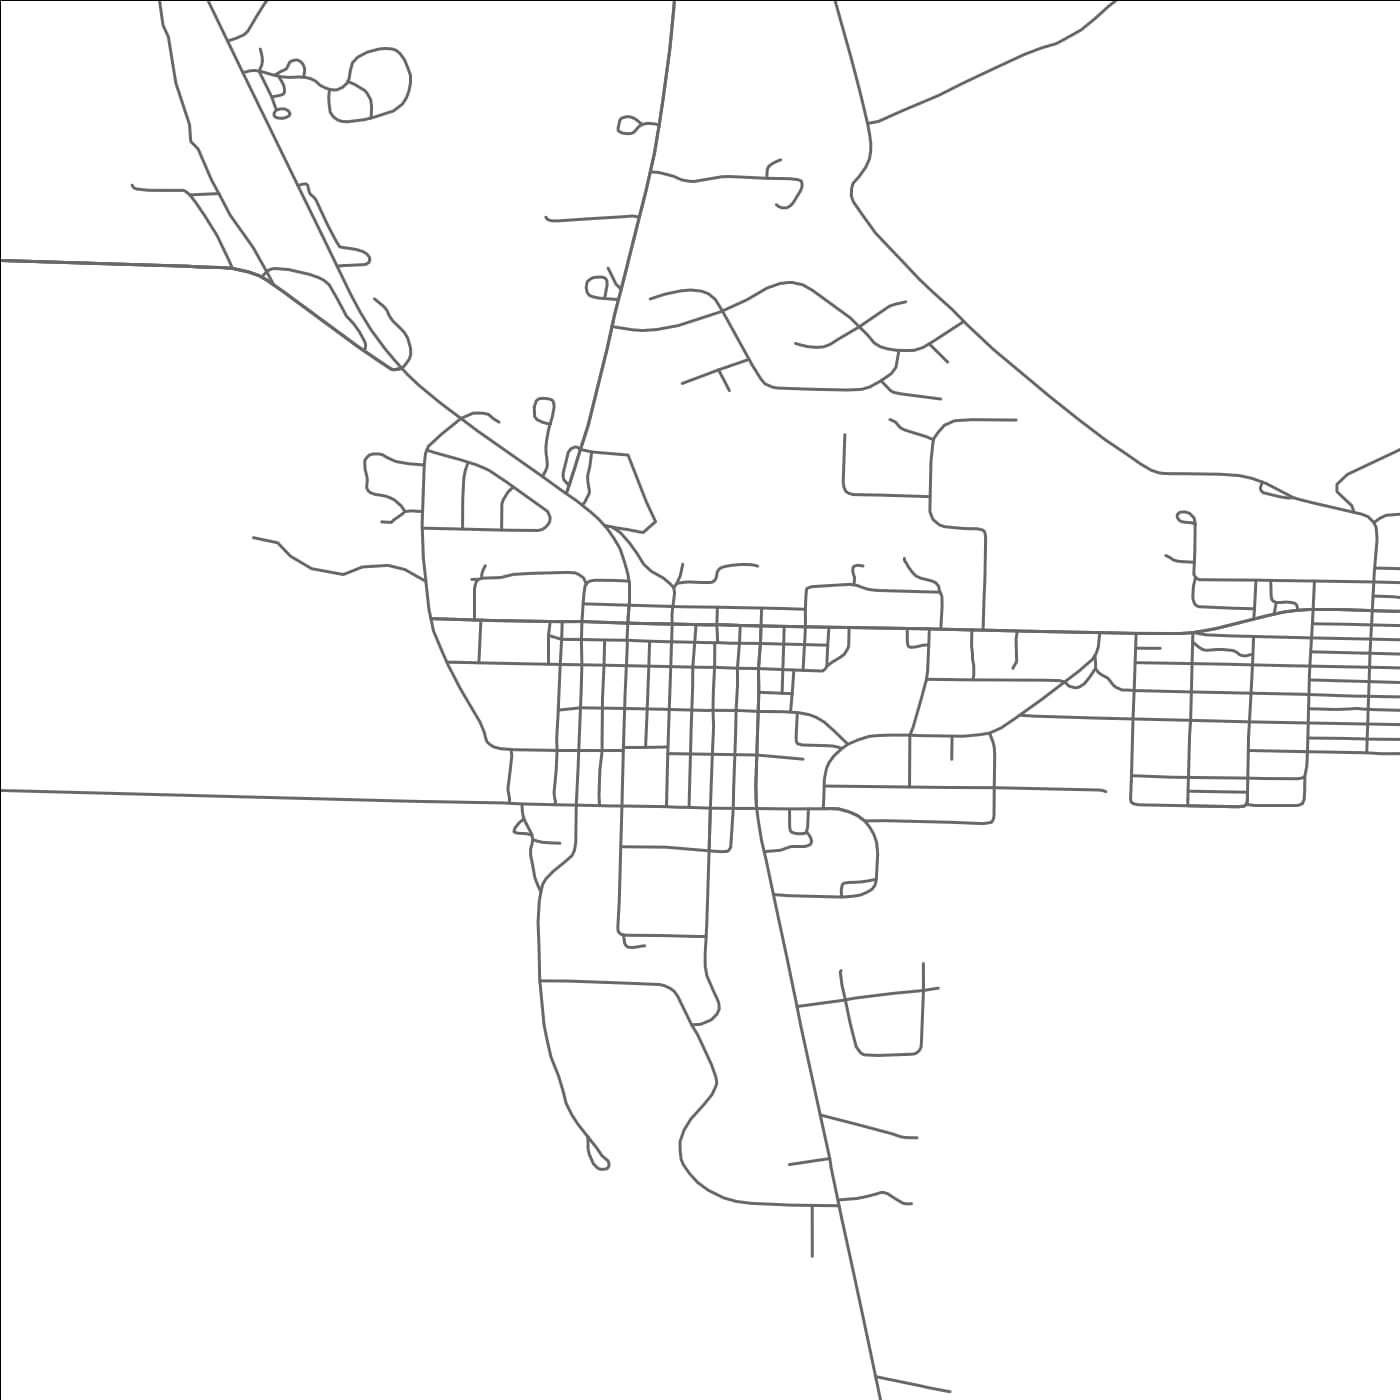 ROAD MAP OF WILLISTON, SOUTH CAROLINA BY MAPBAKES